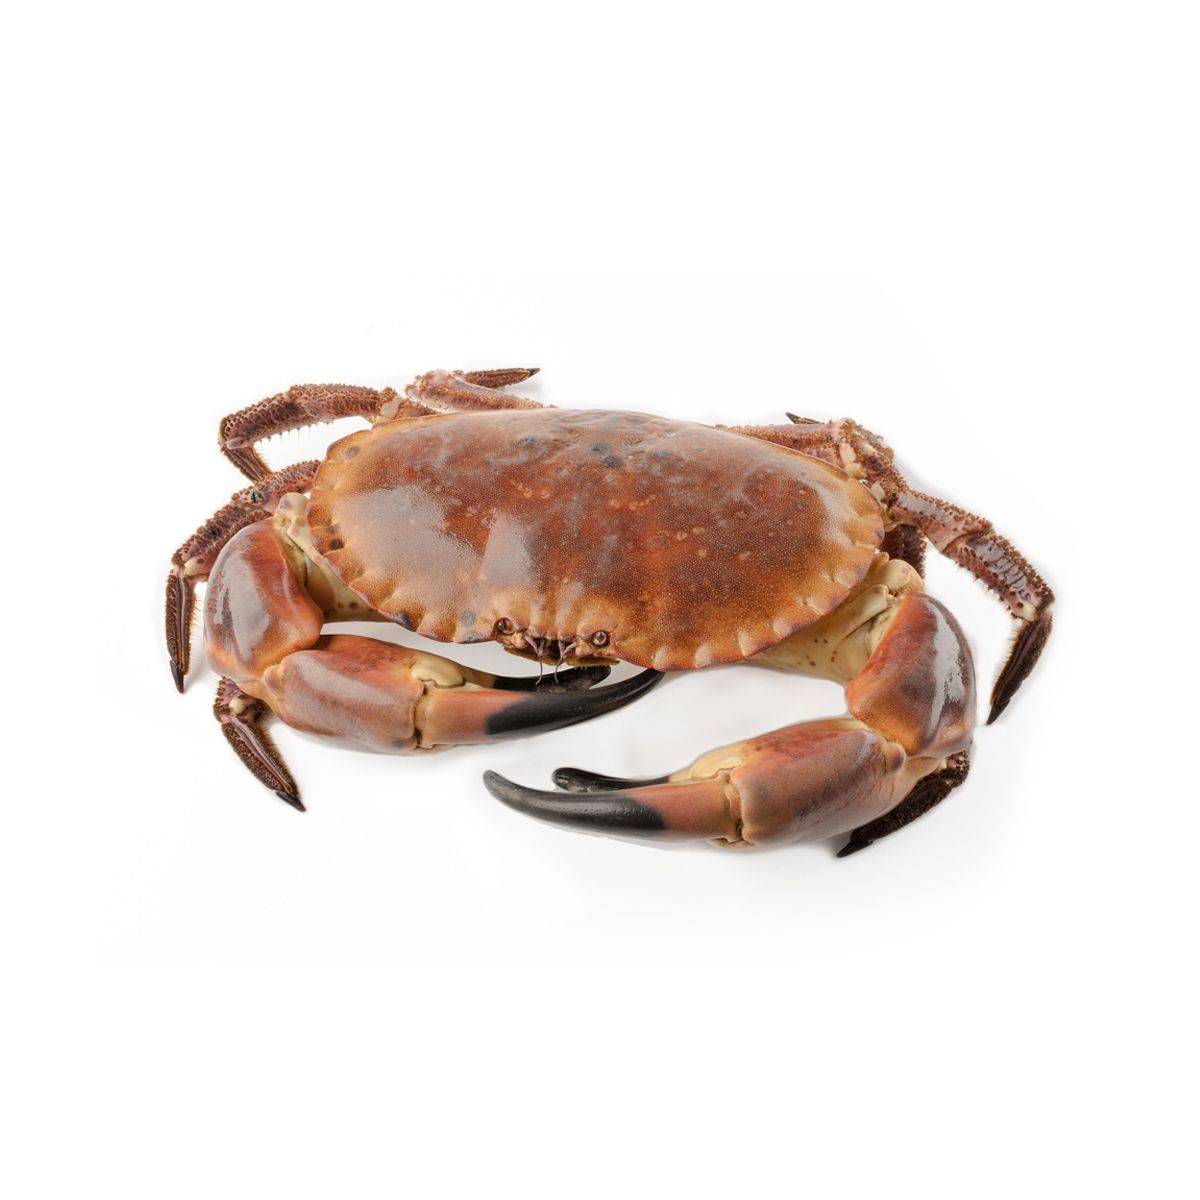 Crab Atlantic, kg